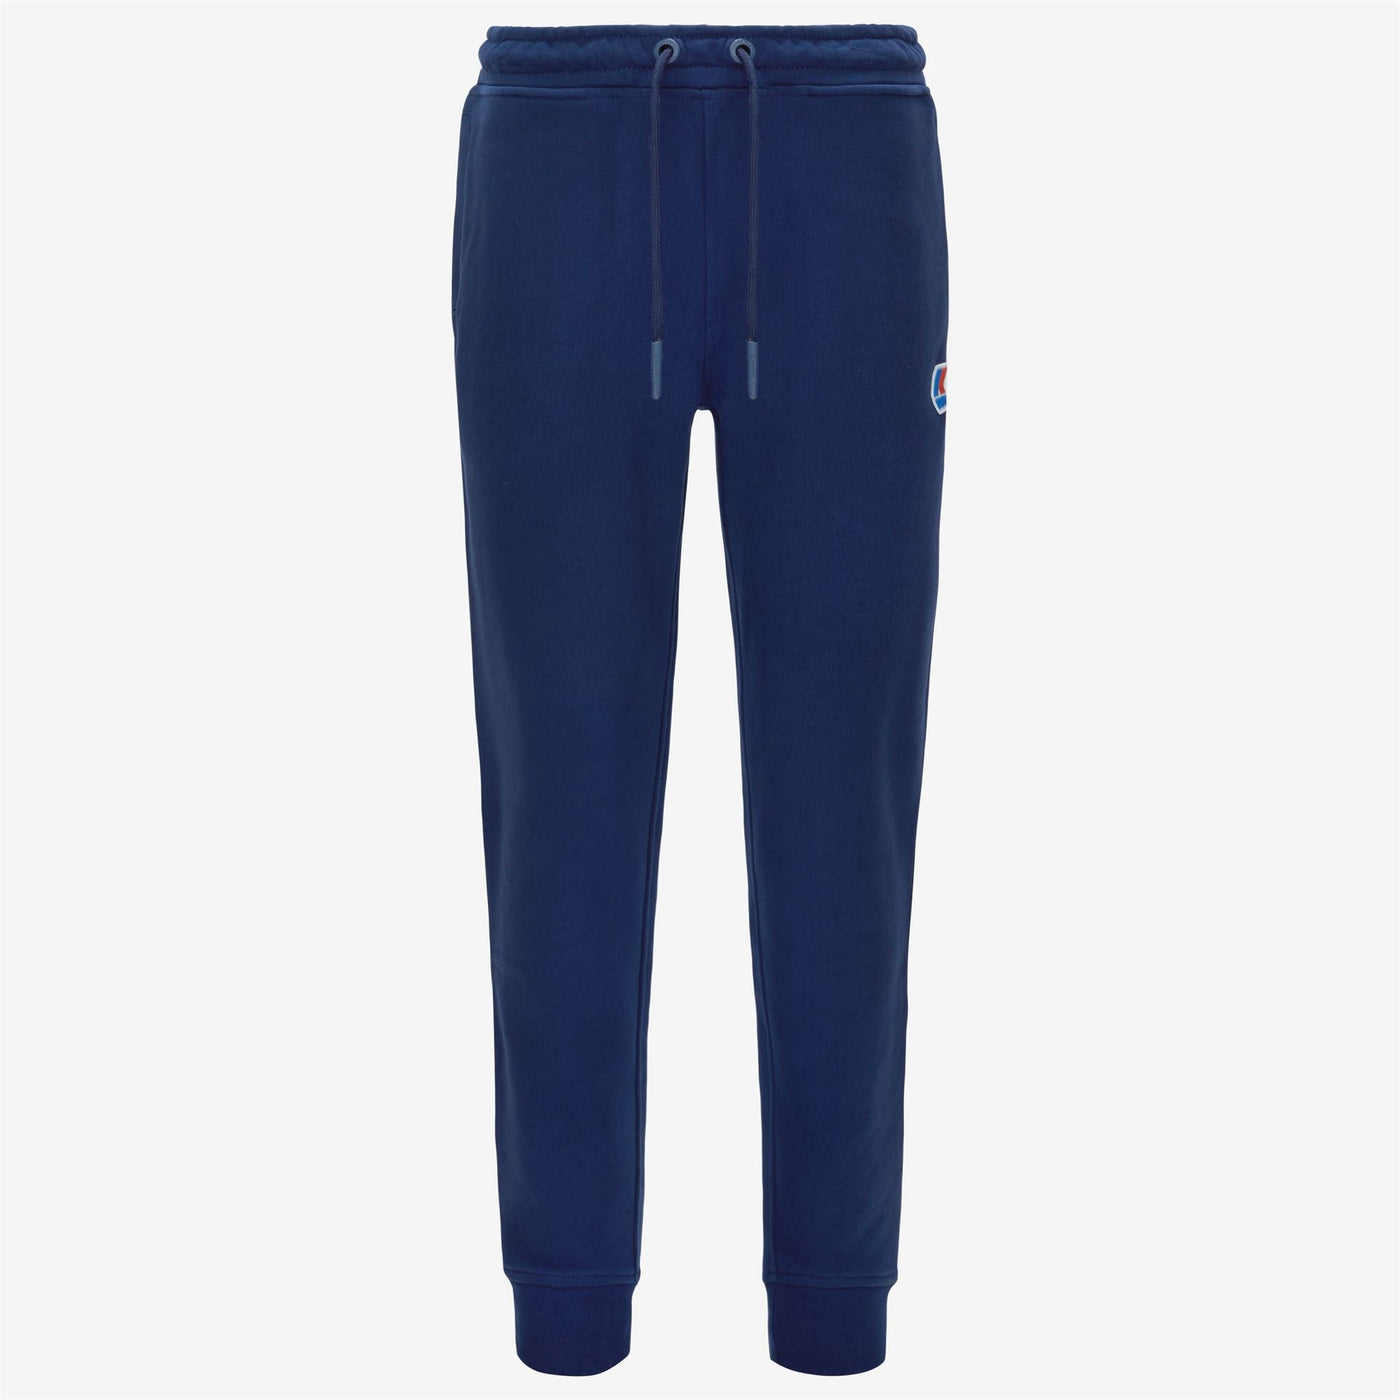 Mick - Pants - Sport Trousers - Man - Blue Medieval